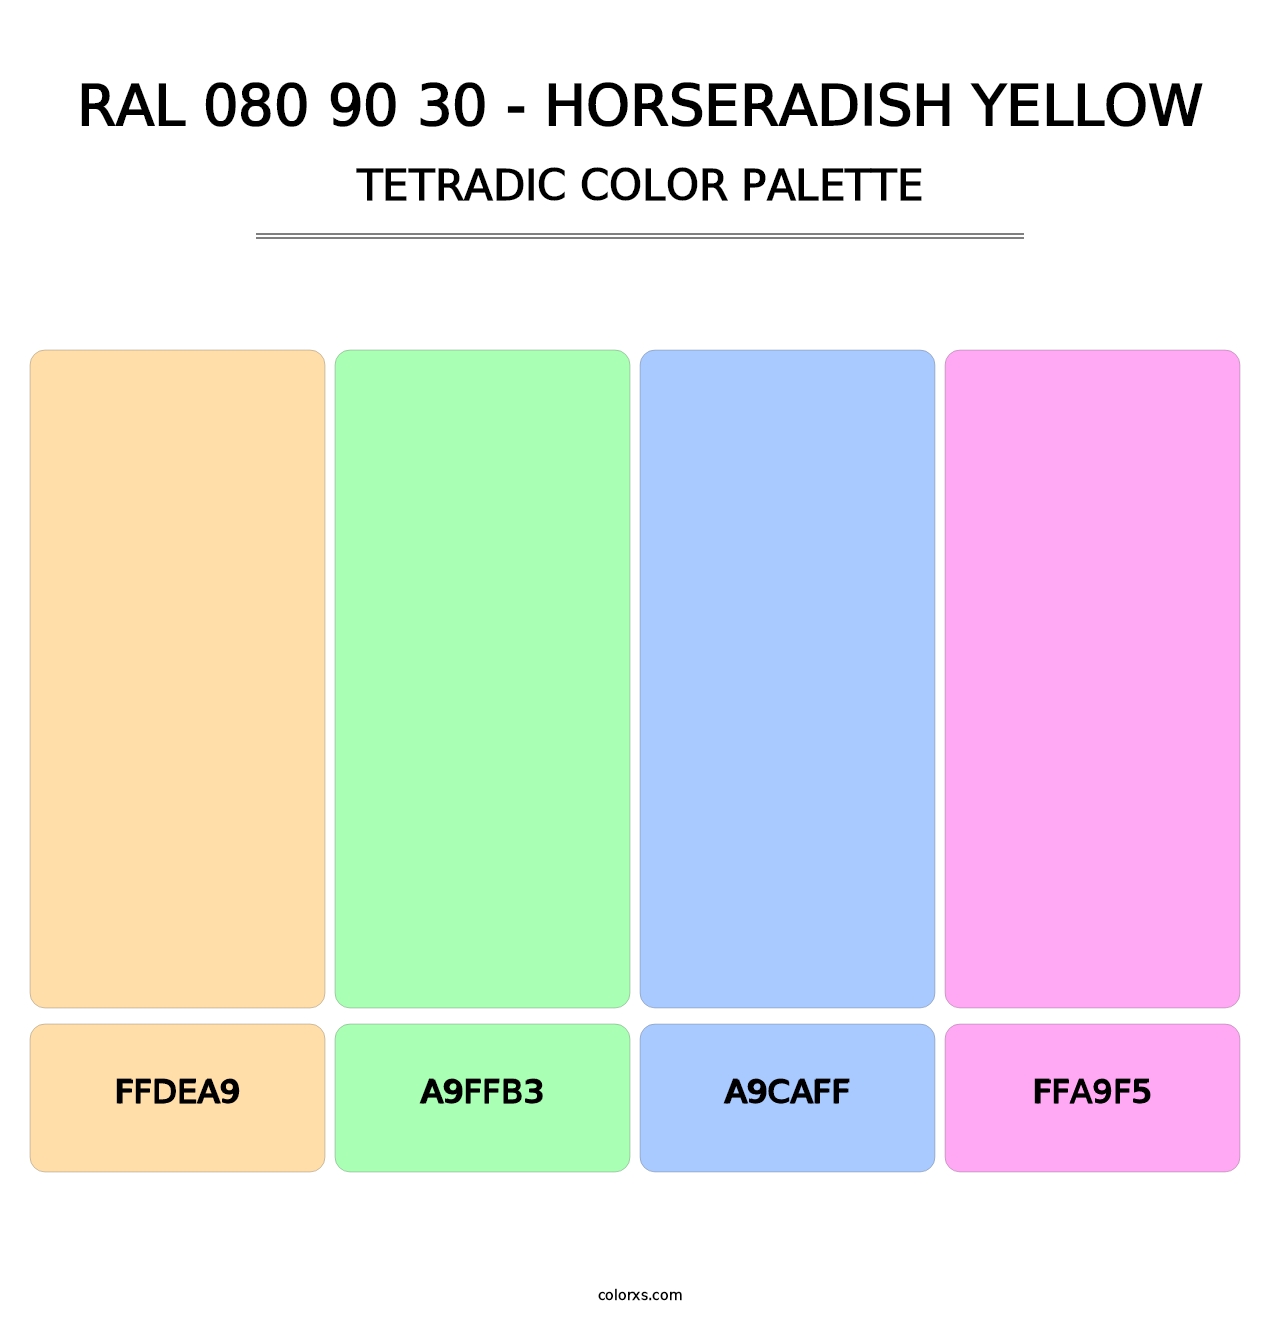 RAL 080 90 30 - Horseradish Yellow - Tetradic Color Palette